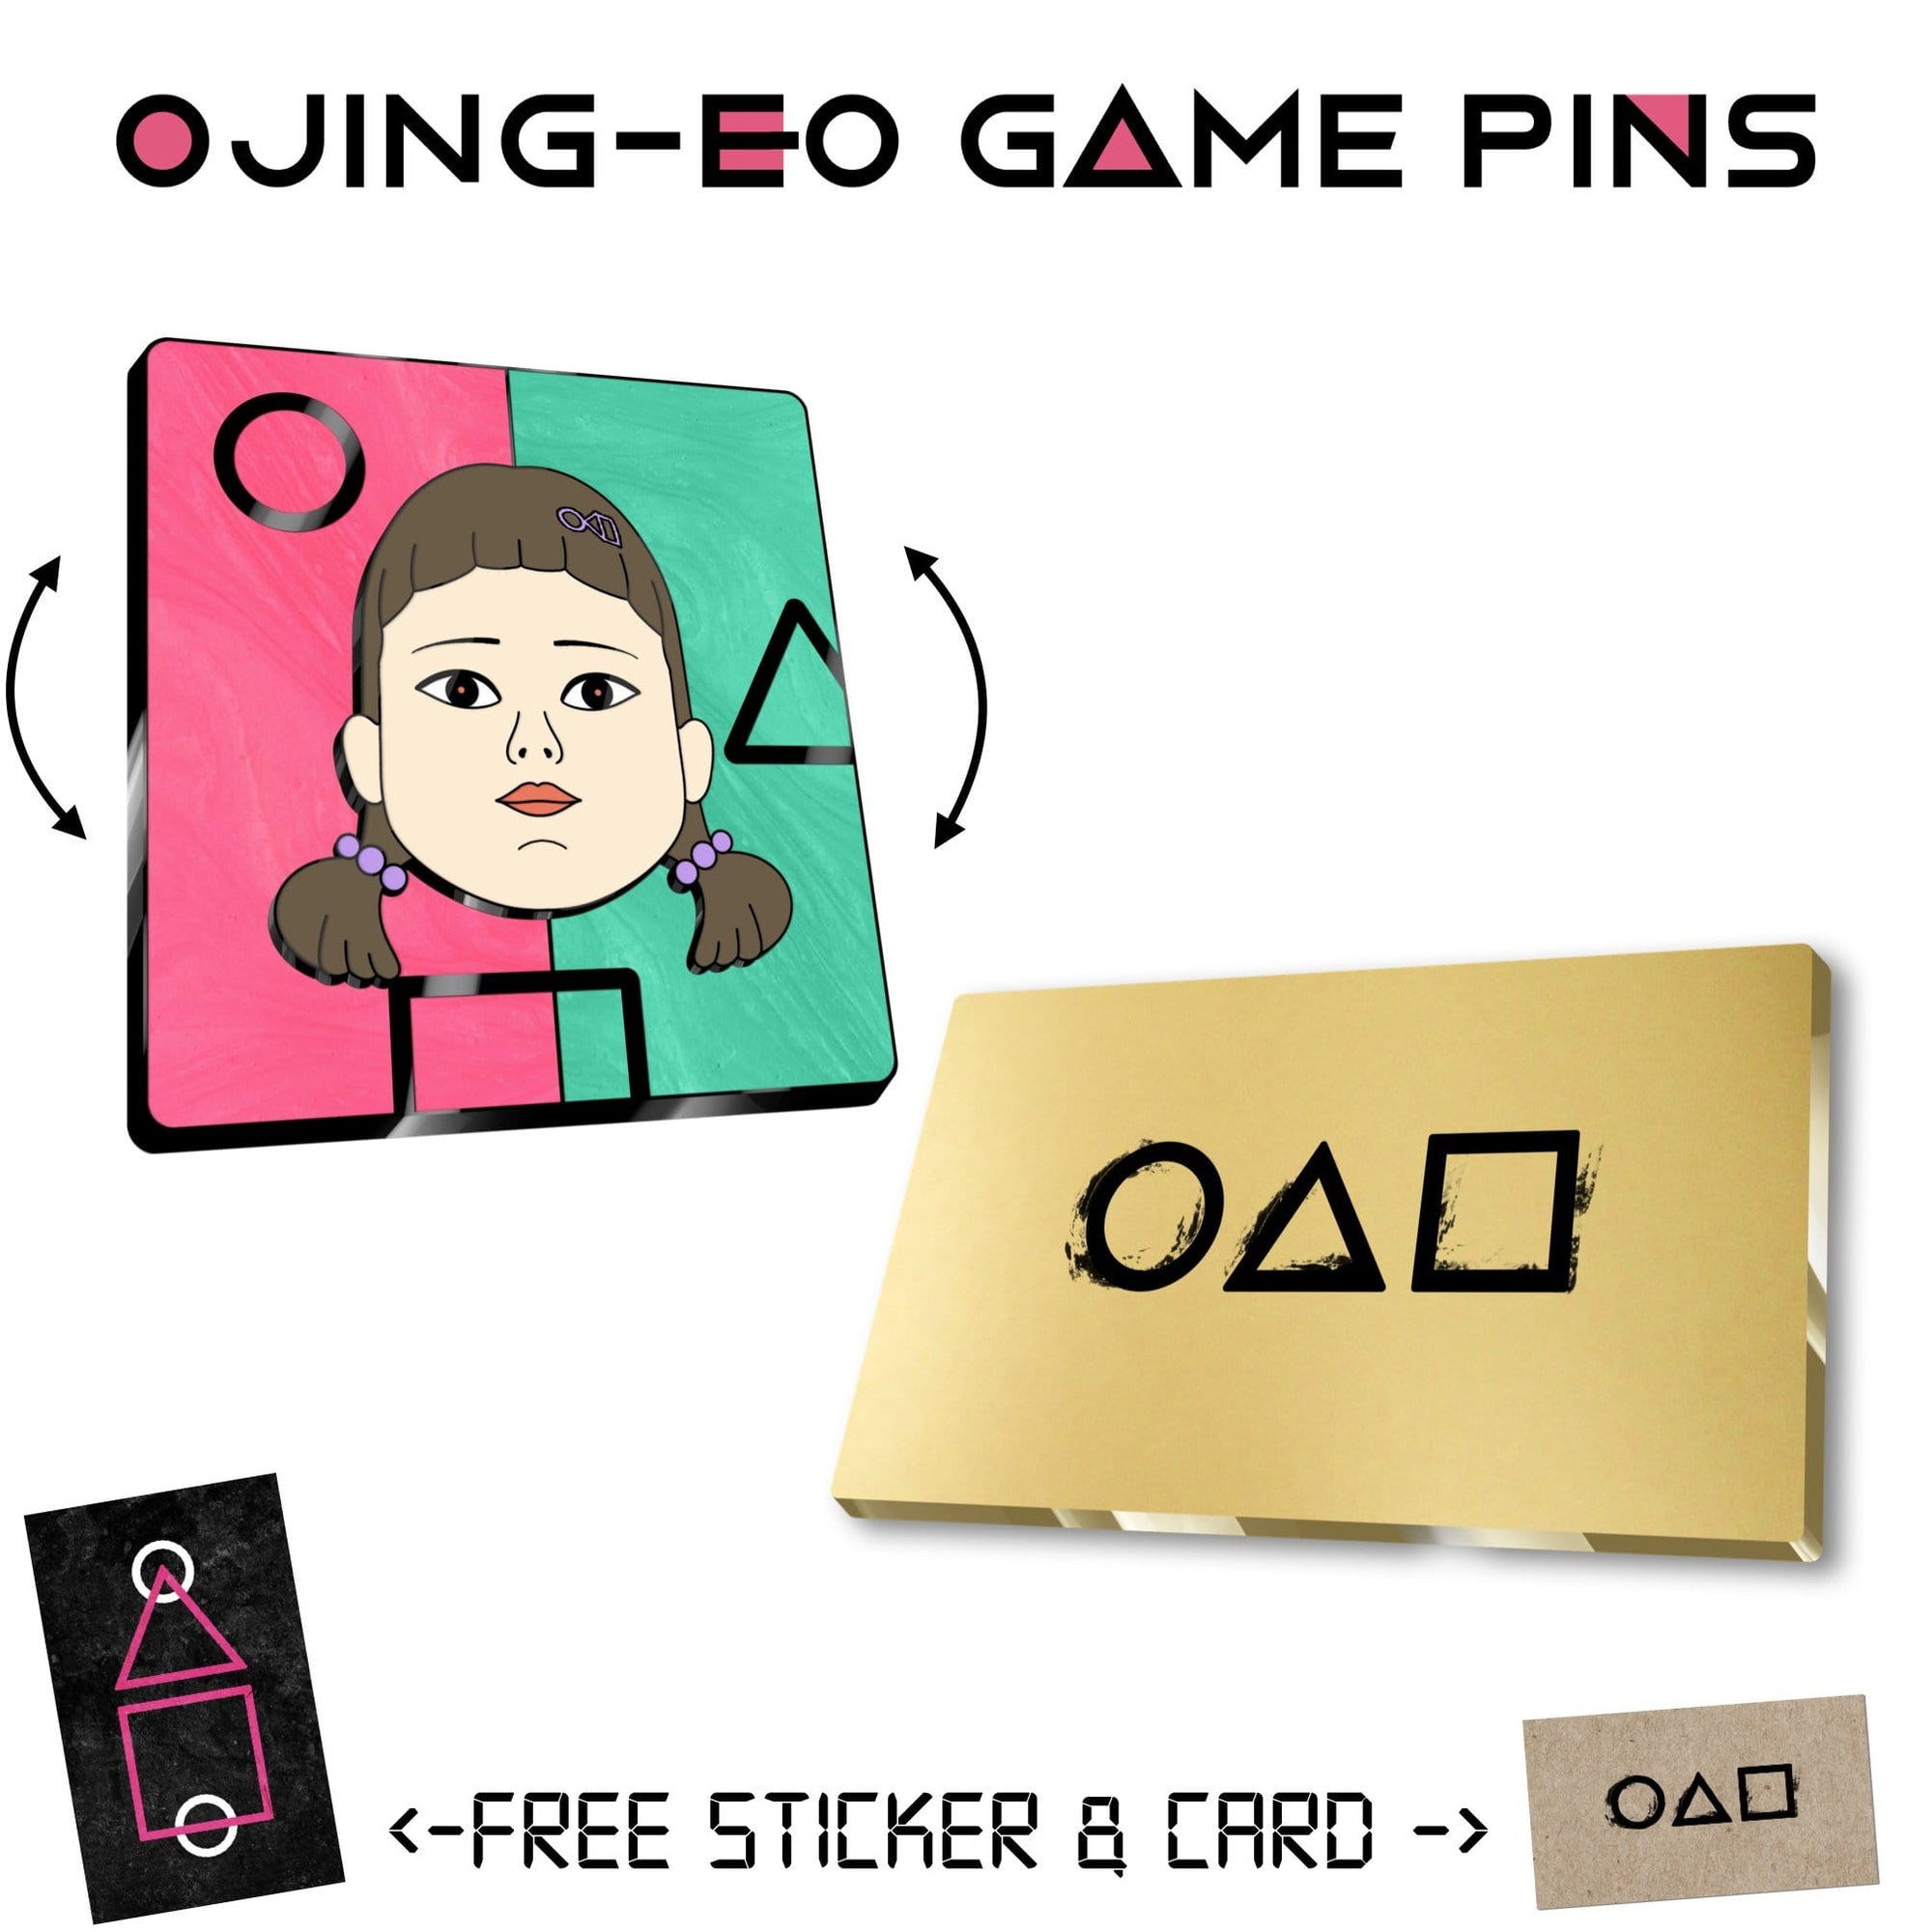 pinbuds 2 Pin Set: Game invite & Light Spinner Pin Squid Game Spinner pin